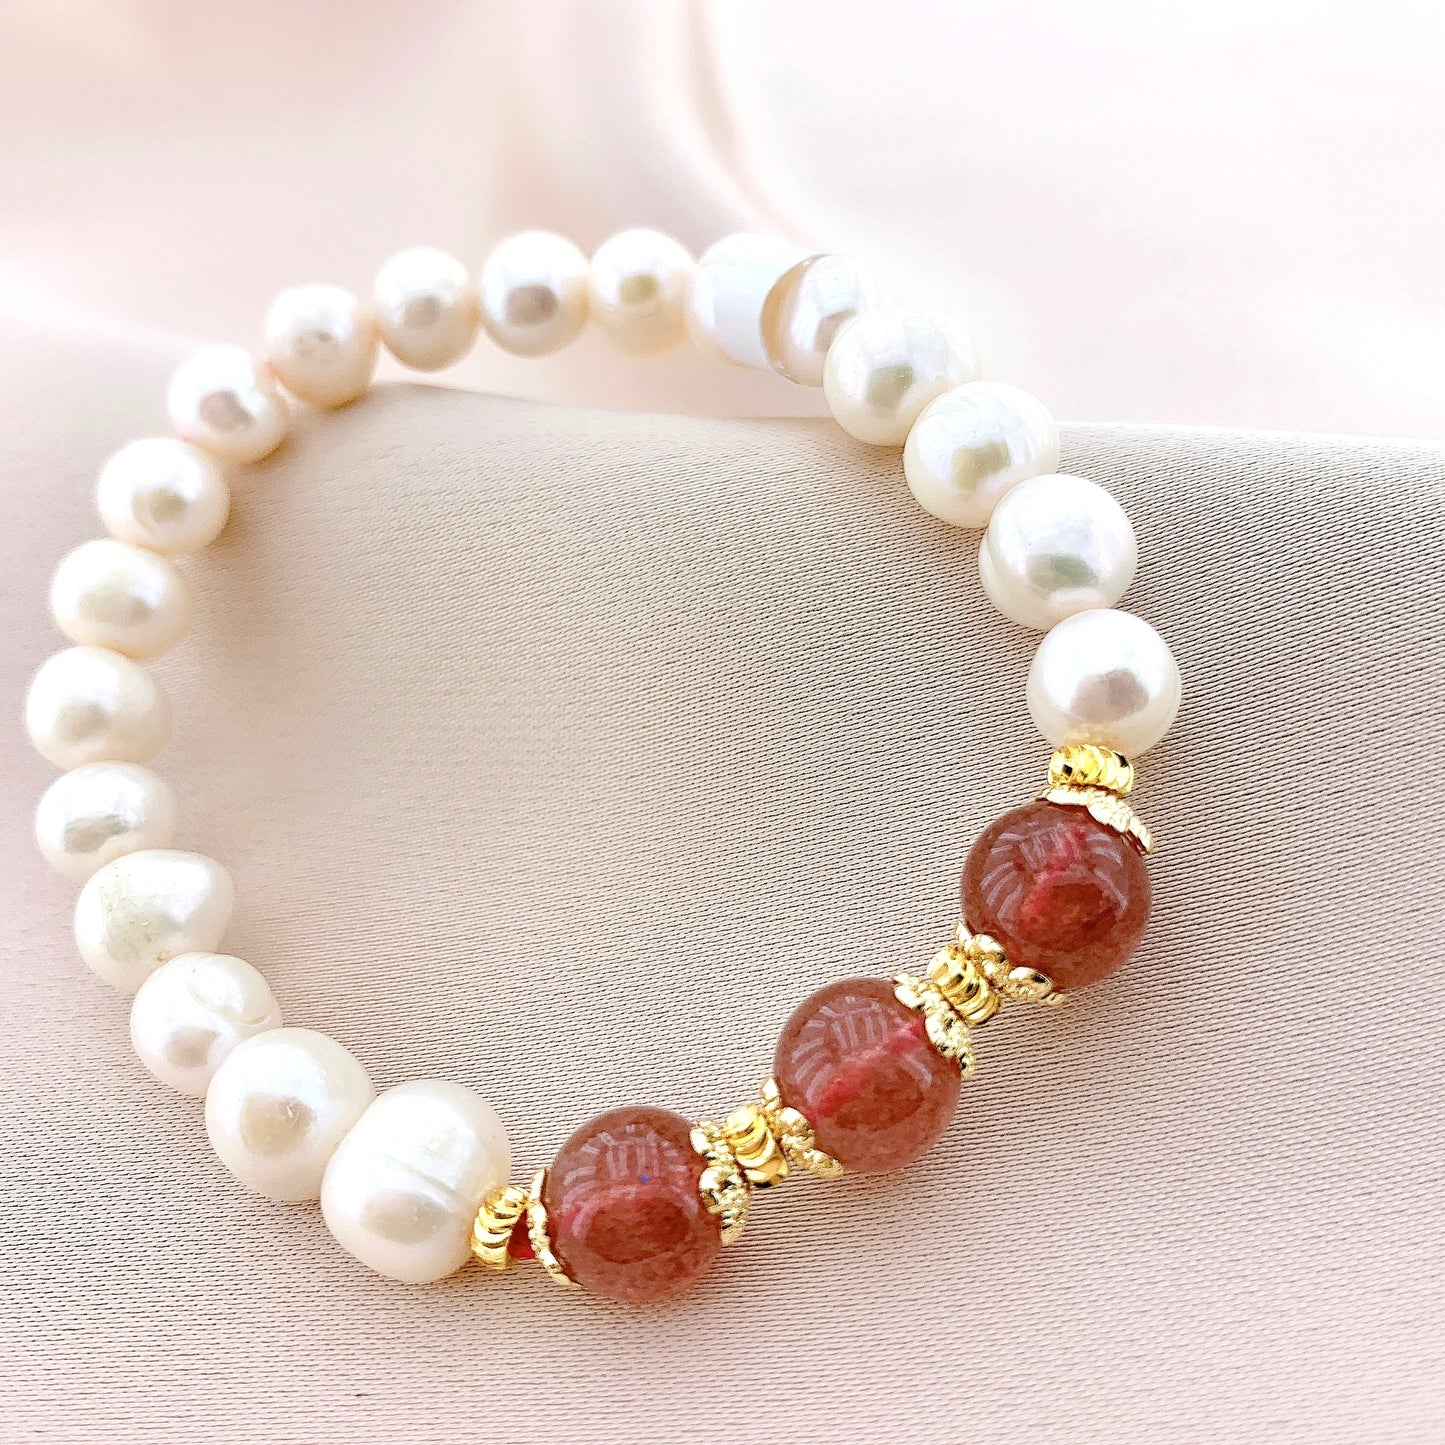 Women's Fashion Pearl Beads Gemstone Bracelets